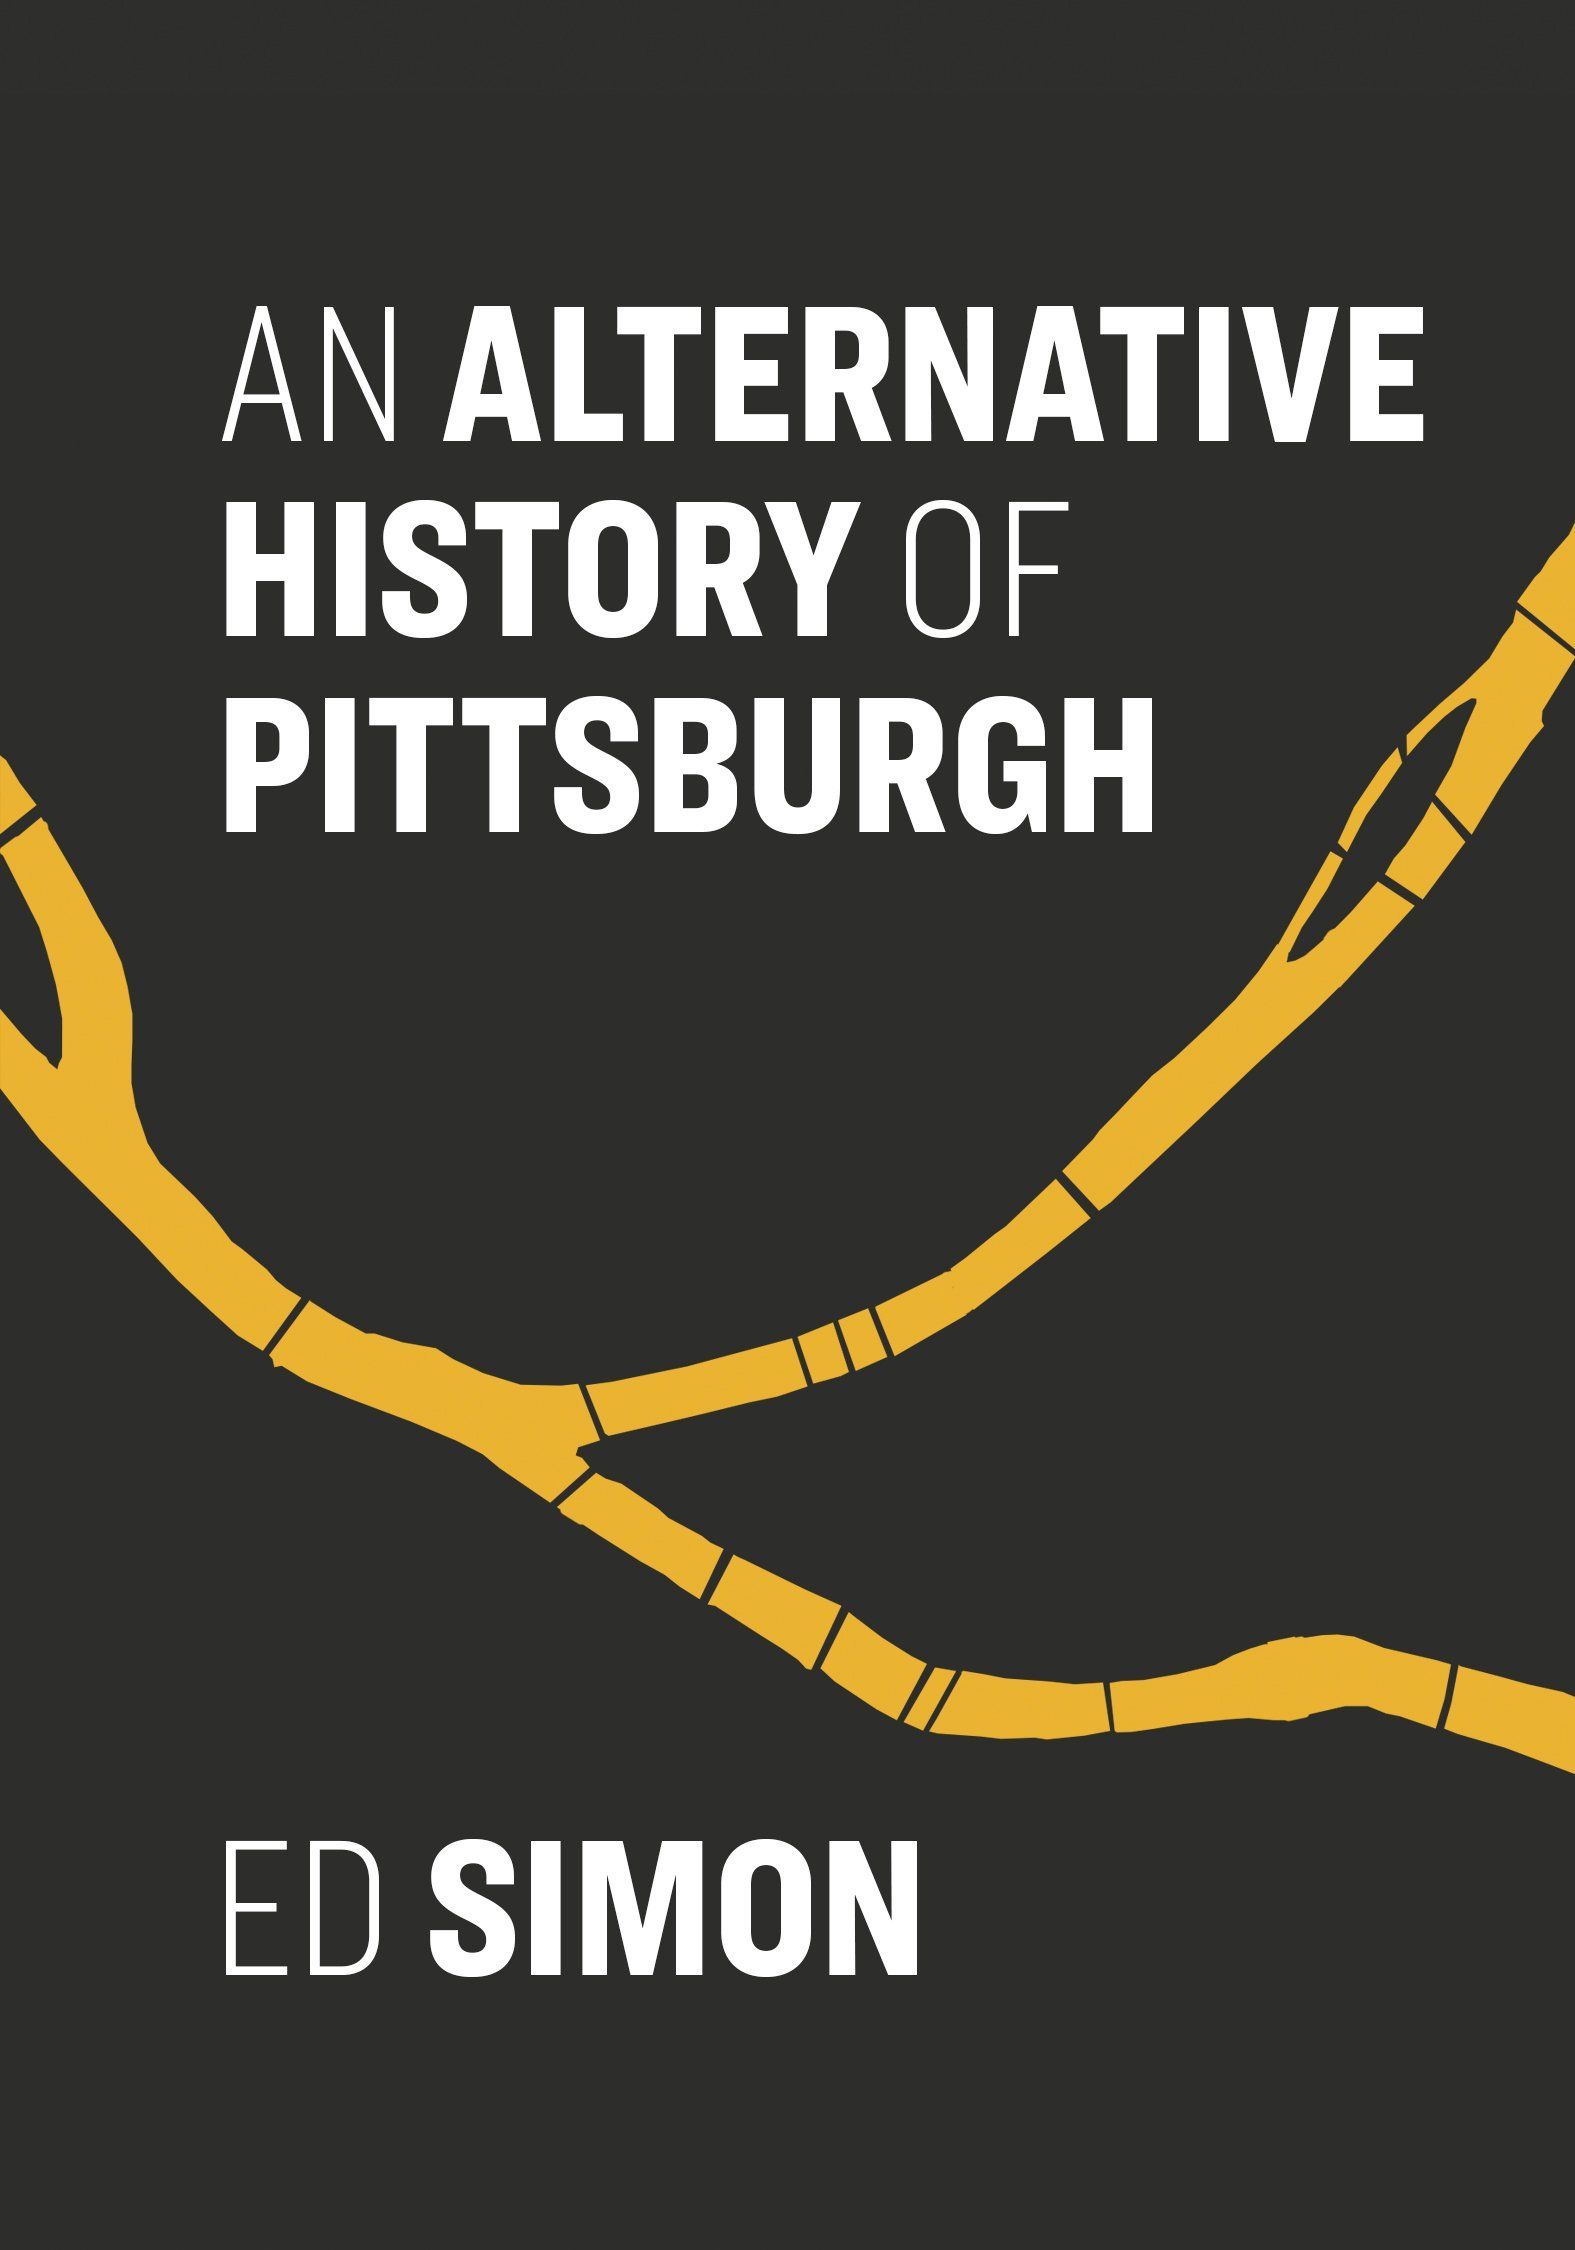 Dark Night Rises: Ed Simon’s Alternative History of Pittsburgh